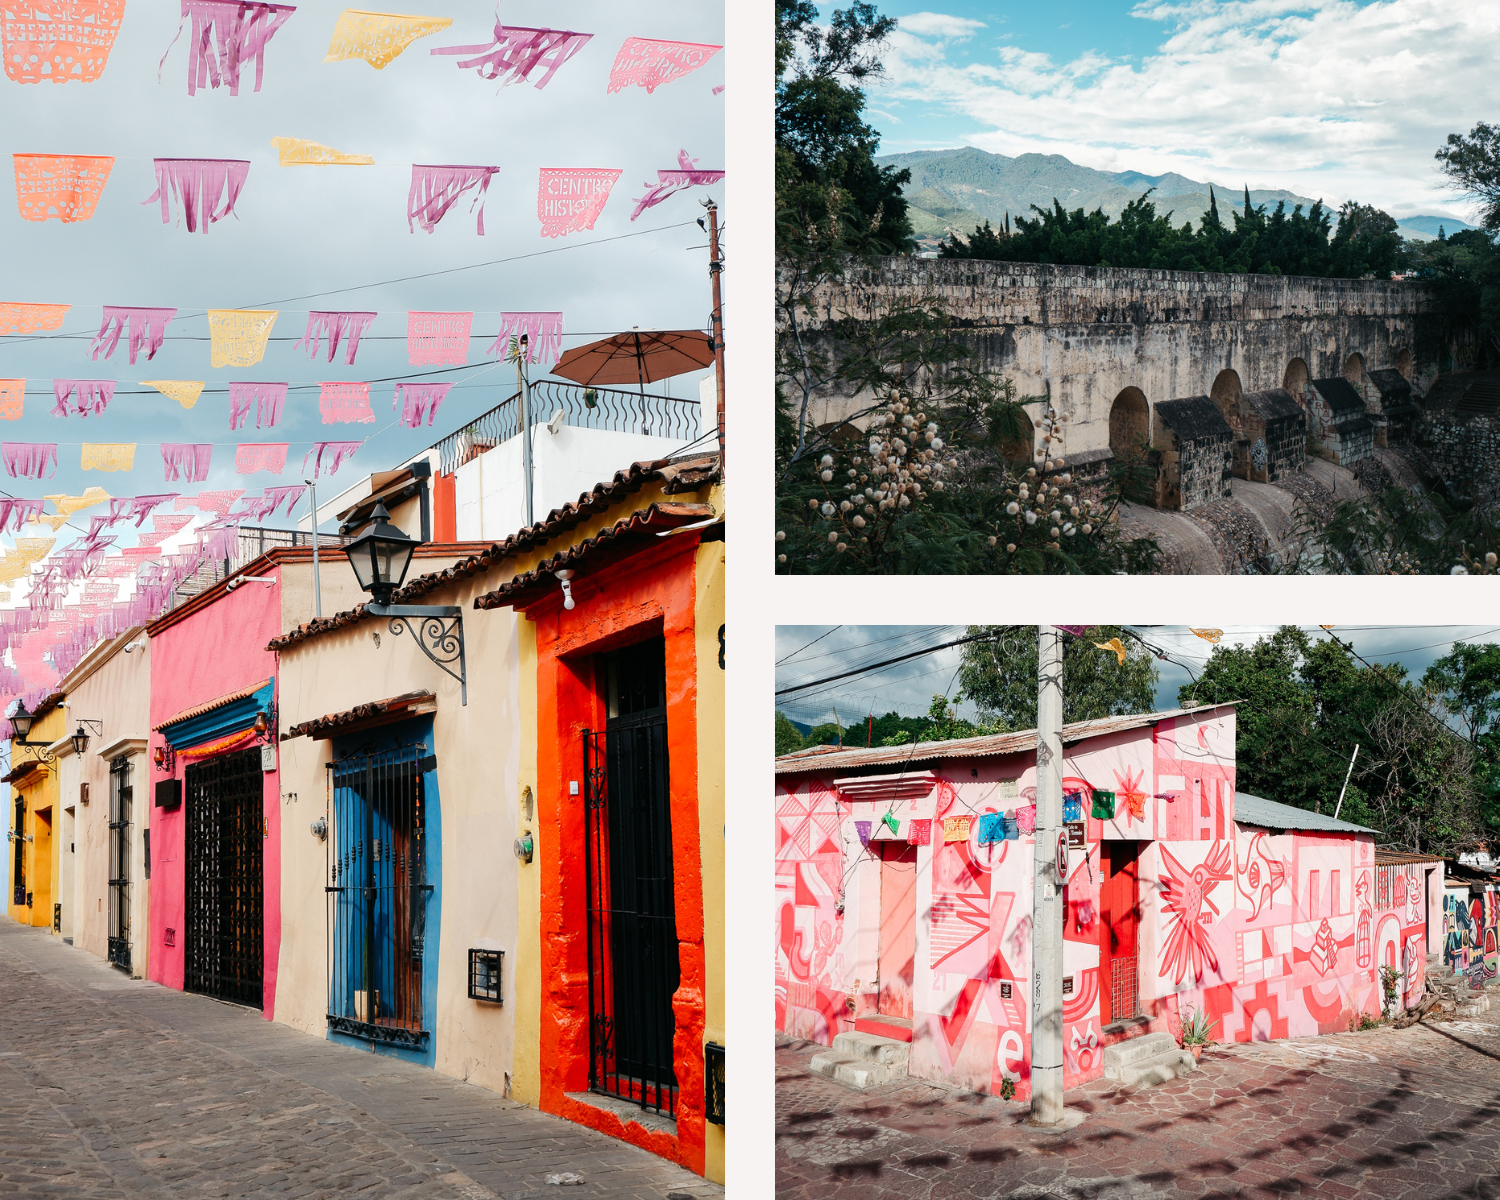 Visiter Oaxaca hors des sentiers battus, le quartier de Xochimilco